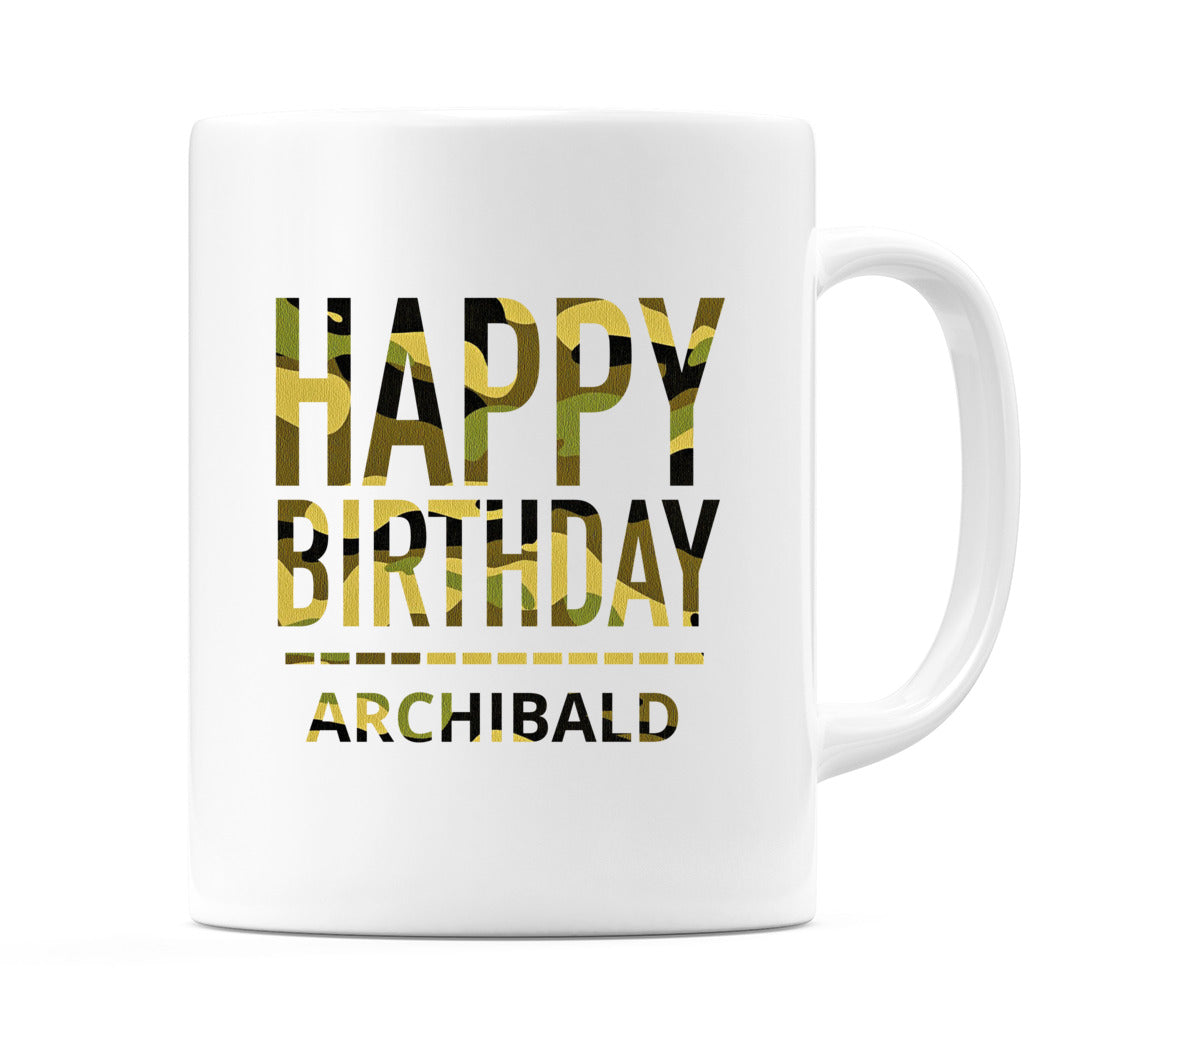 Happy Birthday Archibald (Camo) Mug Cup by WeDoMugs